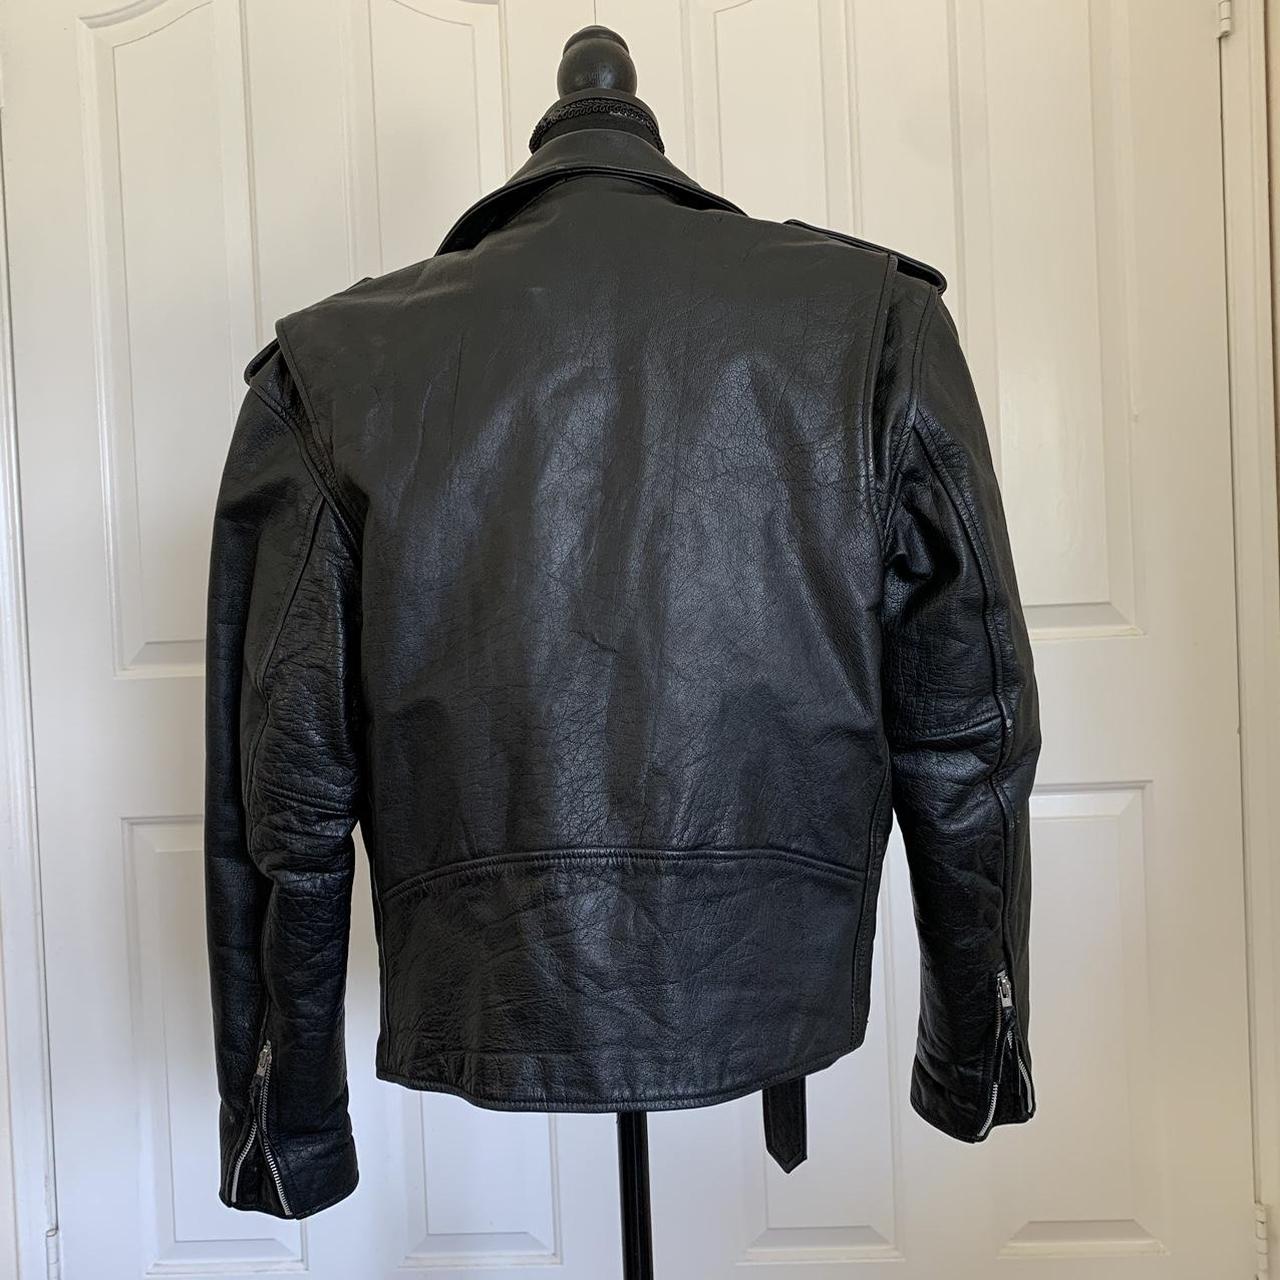 FMC Vintage Leather Jacket Biker Please view the... - Depop